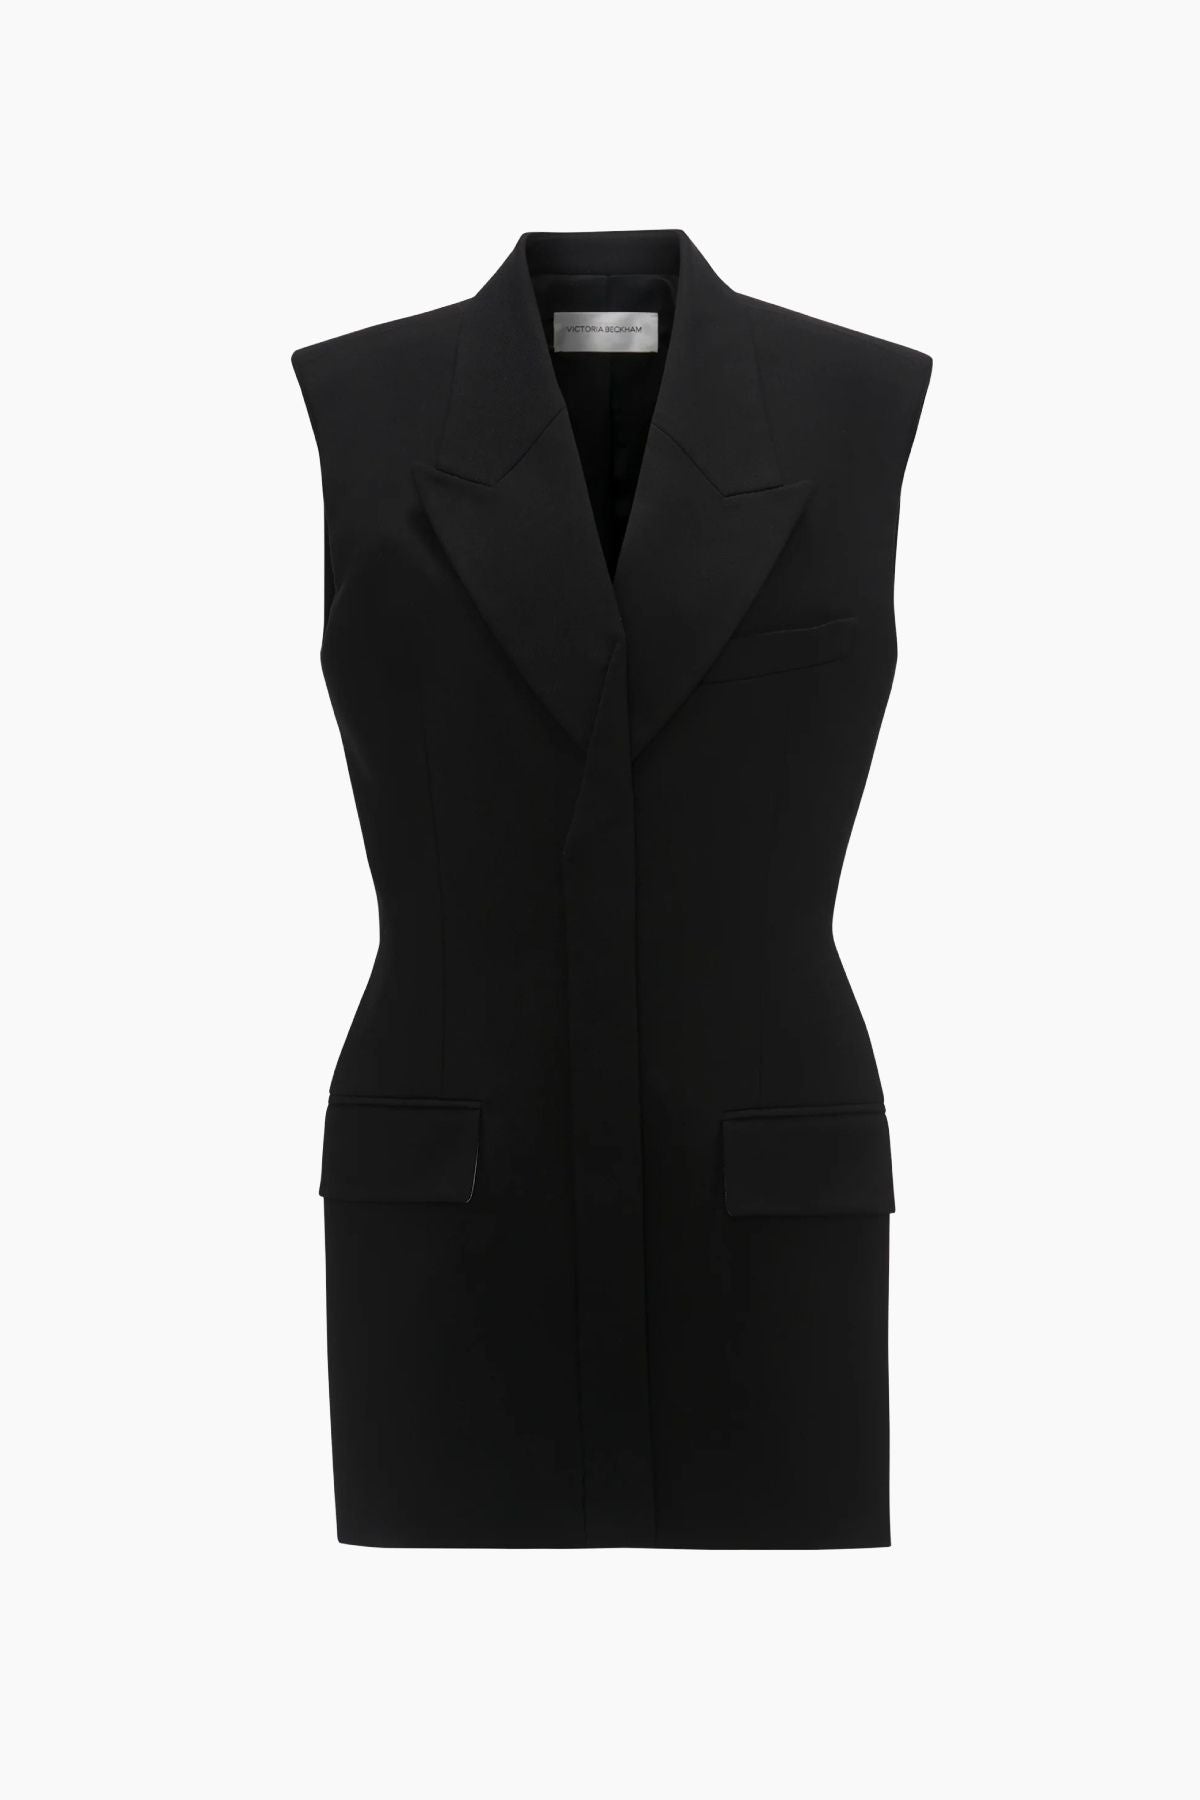 Victoria Beckham Sleeveless Tailored Vest Dress - Black